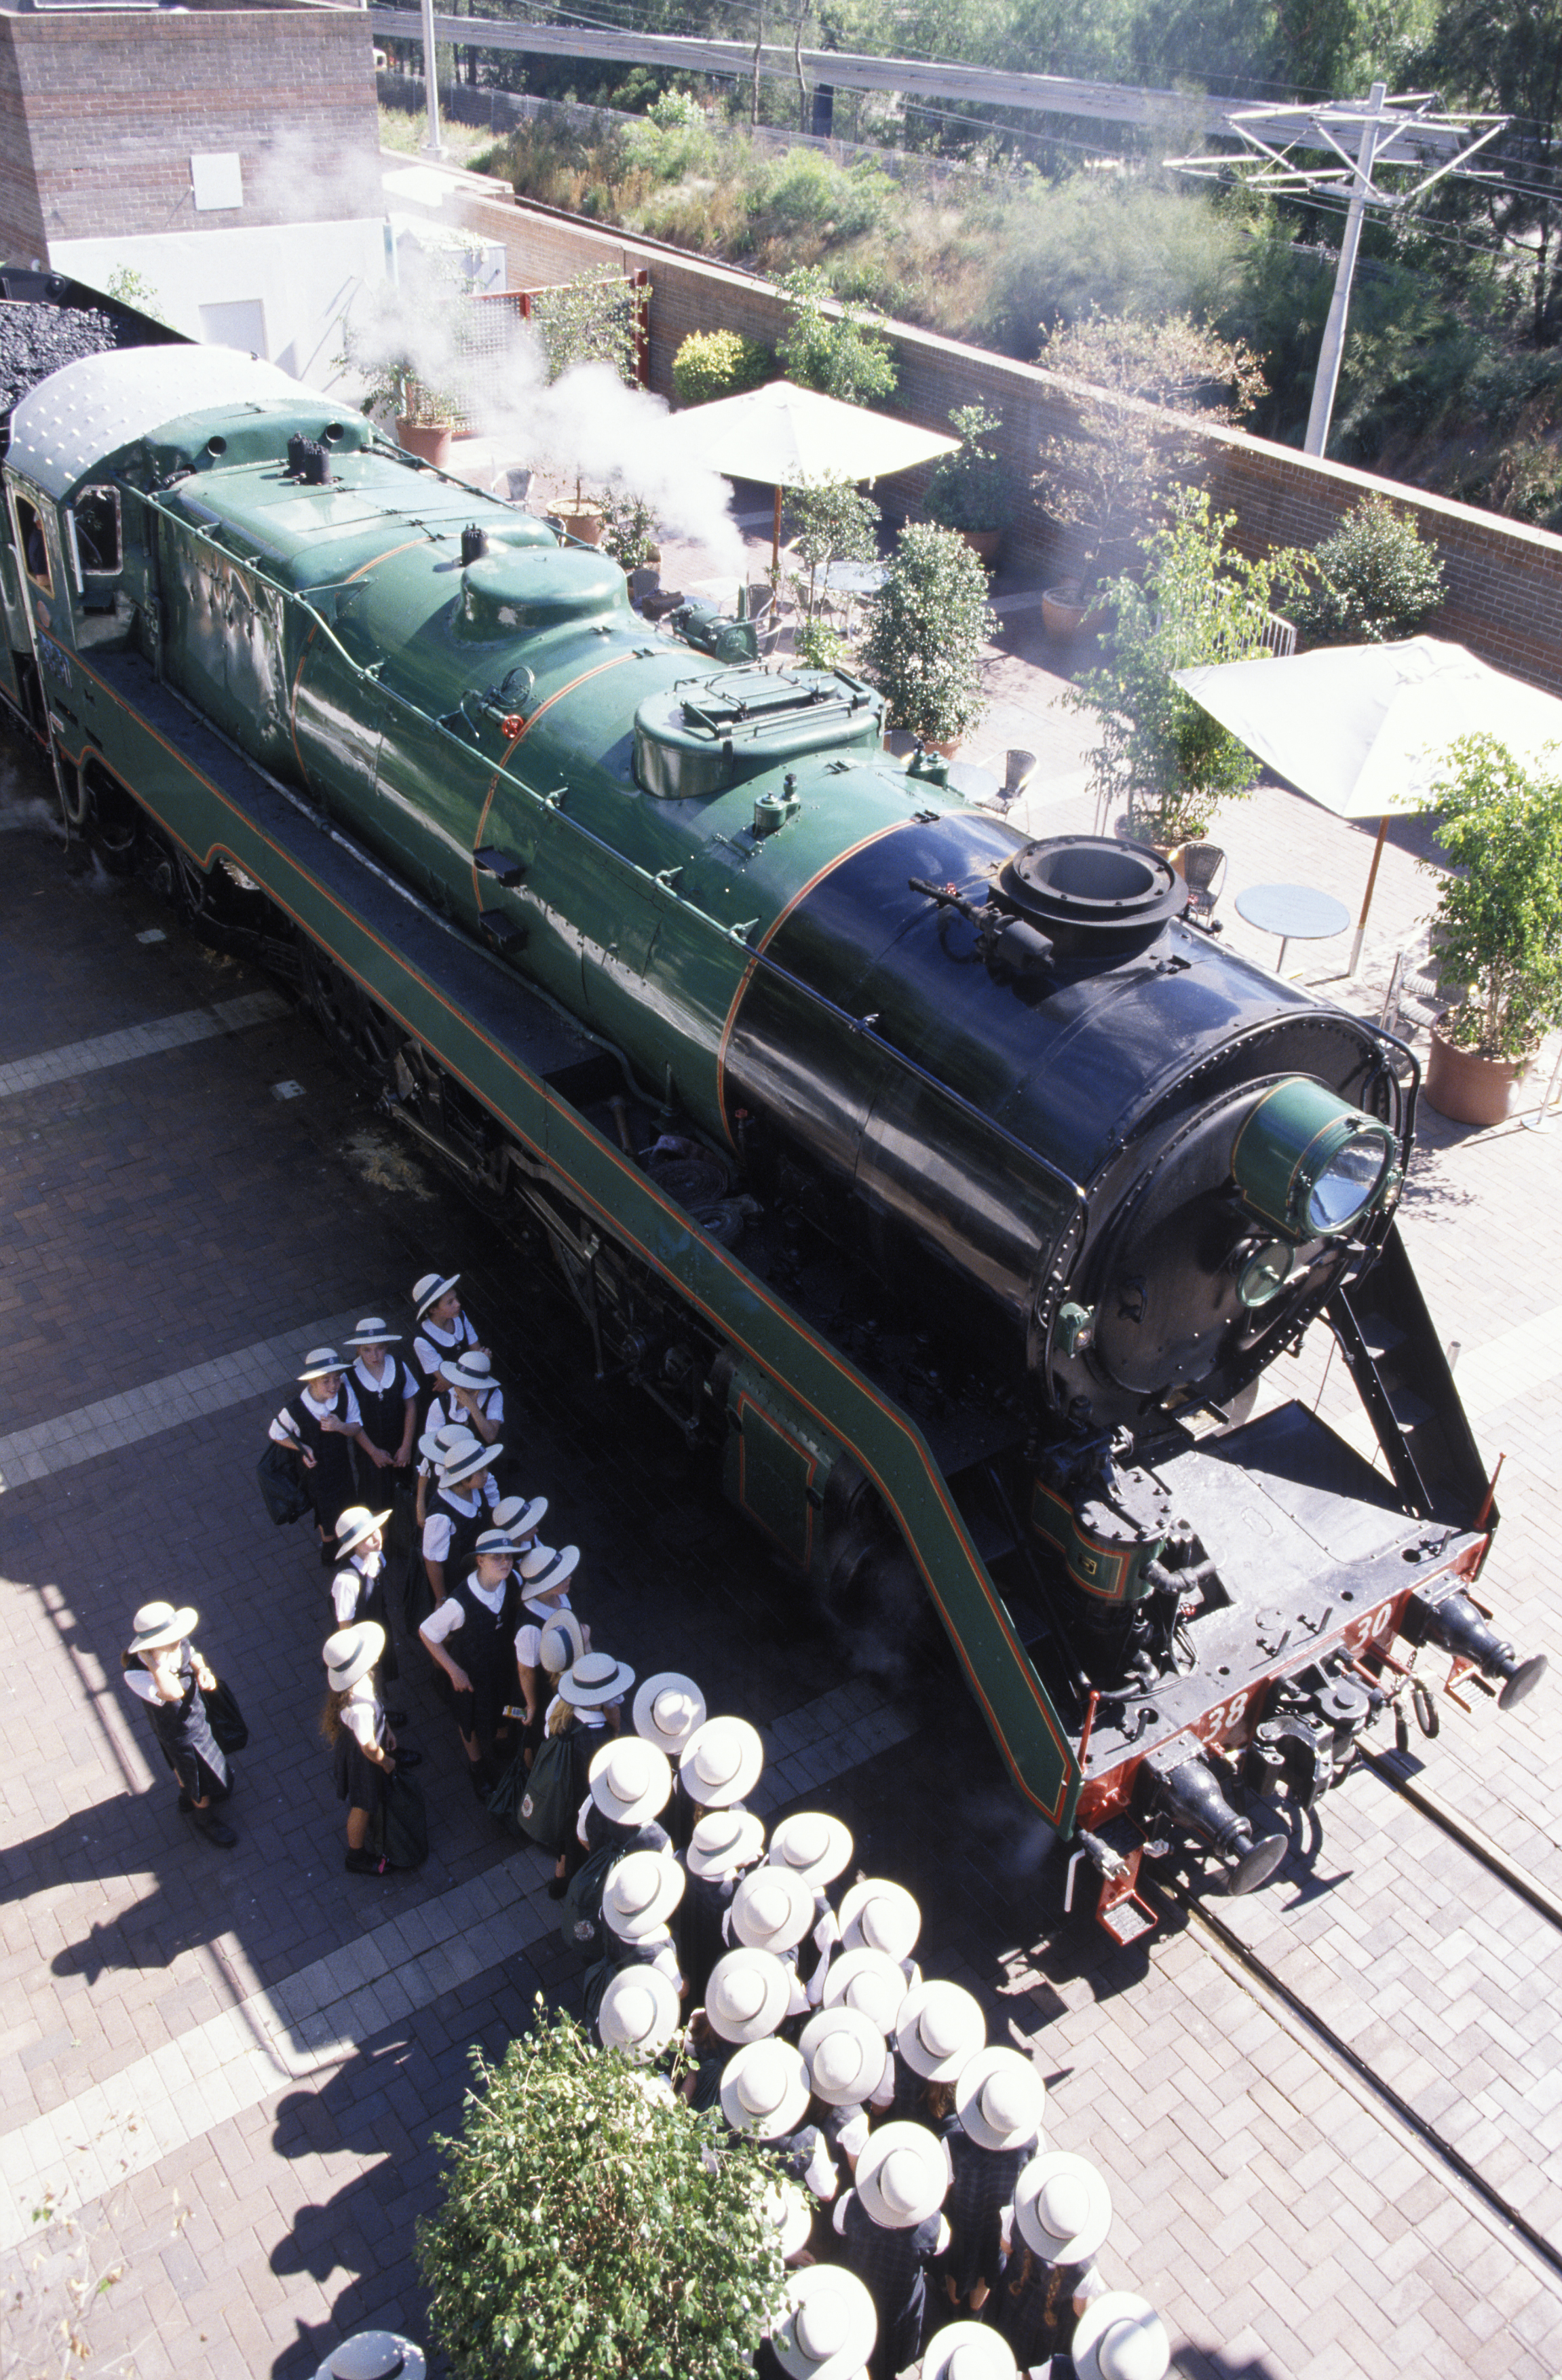 Steam locomotive No. 3830